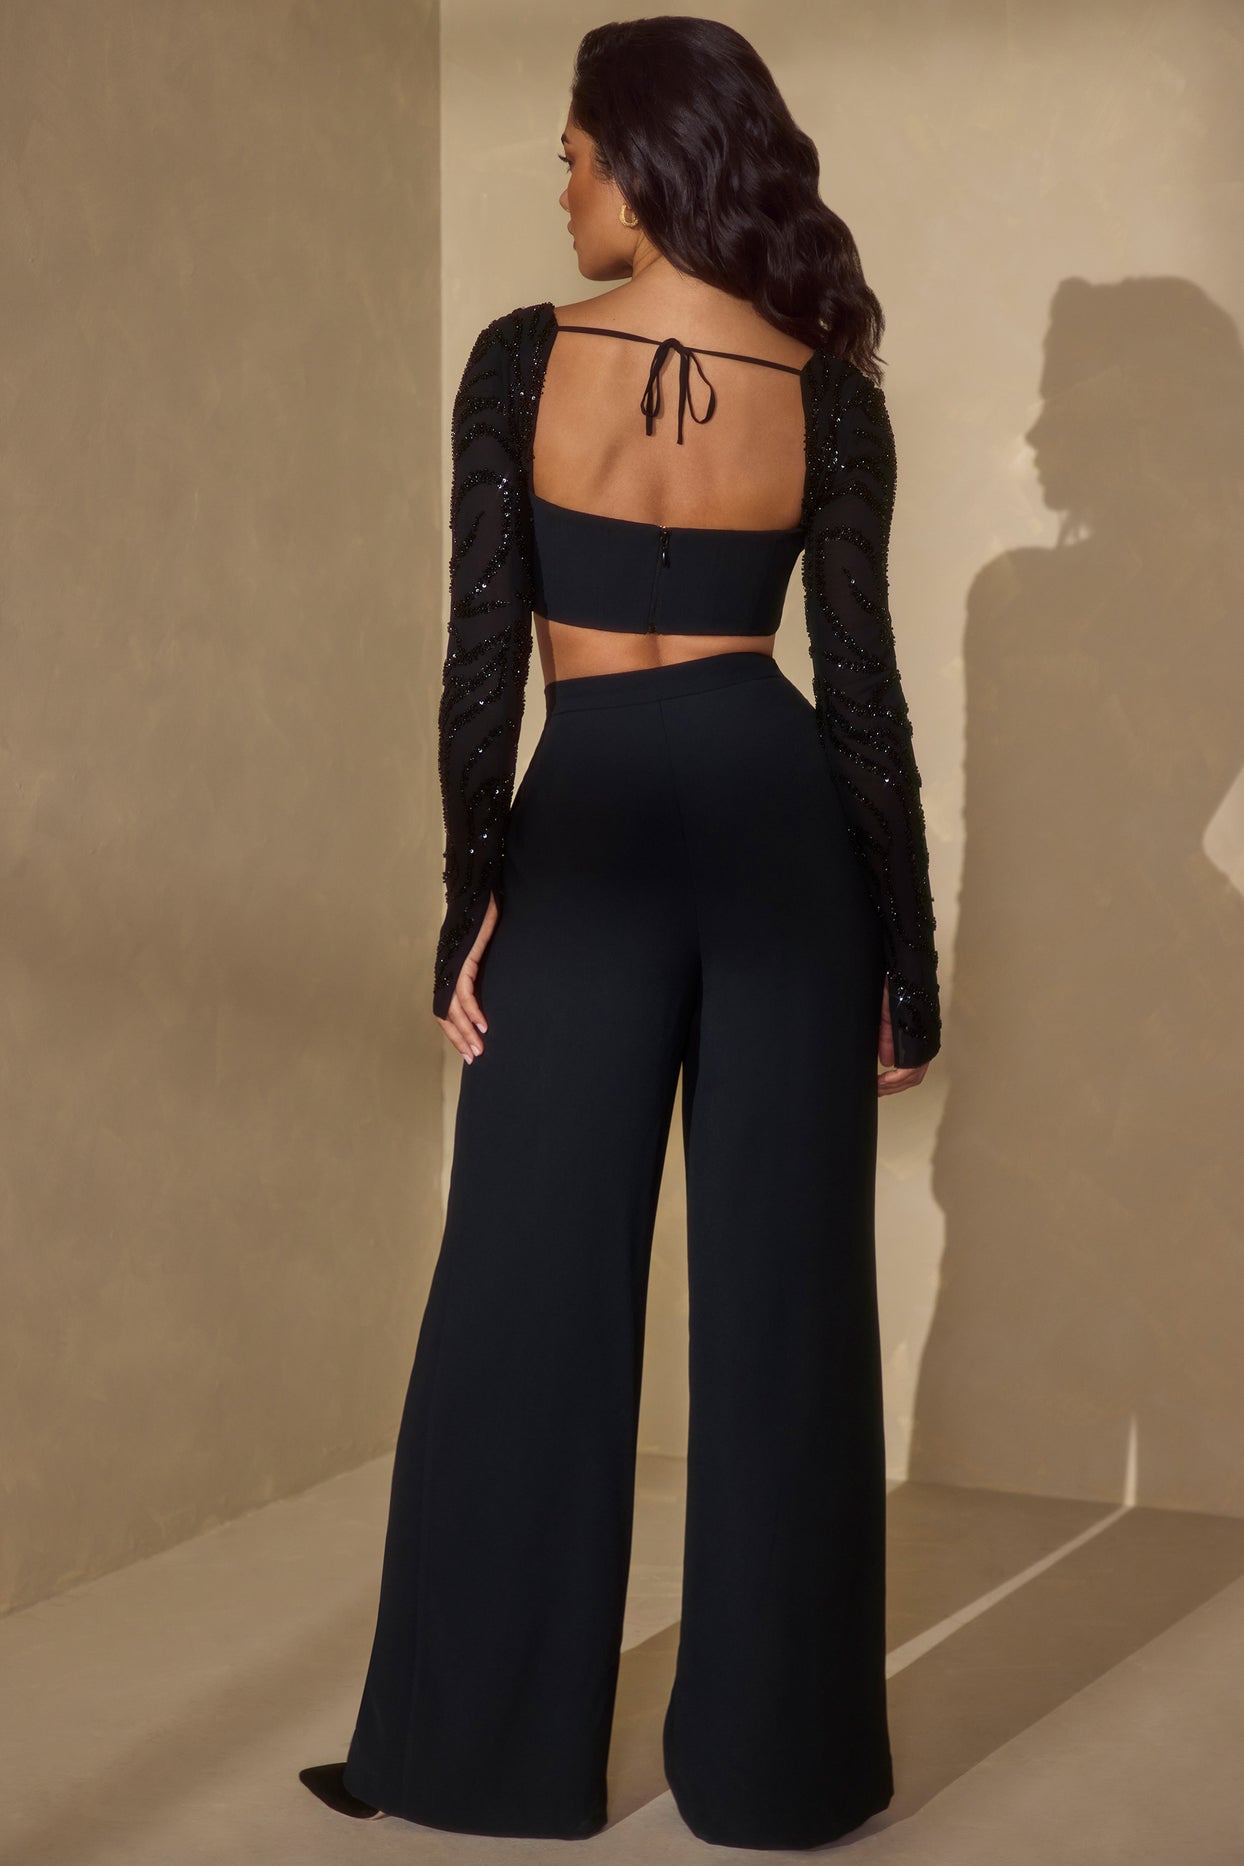 Capri pants in black lace - 7,90 €